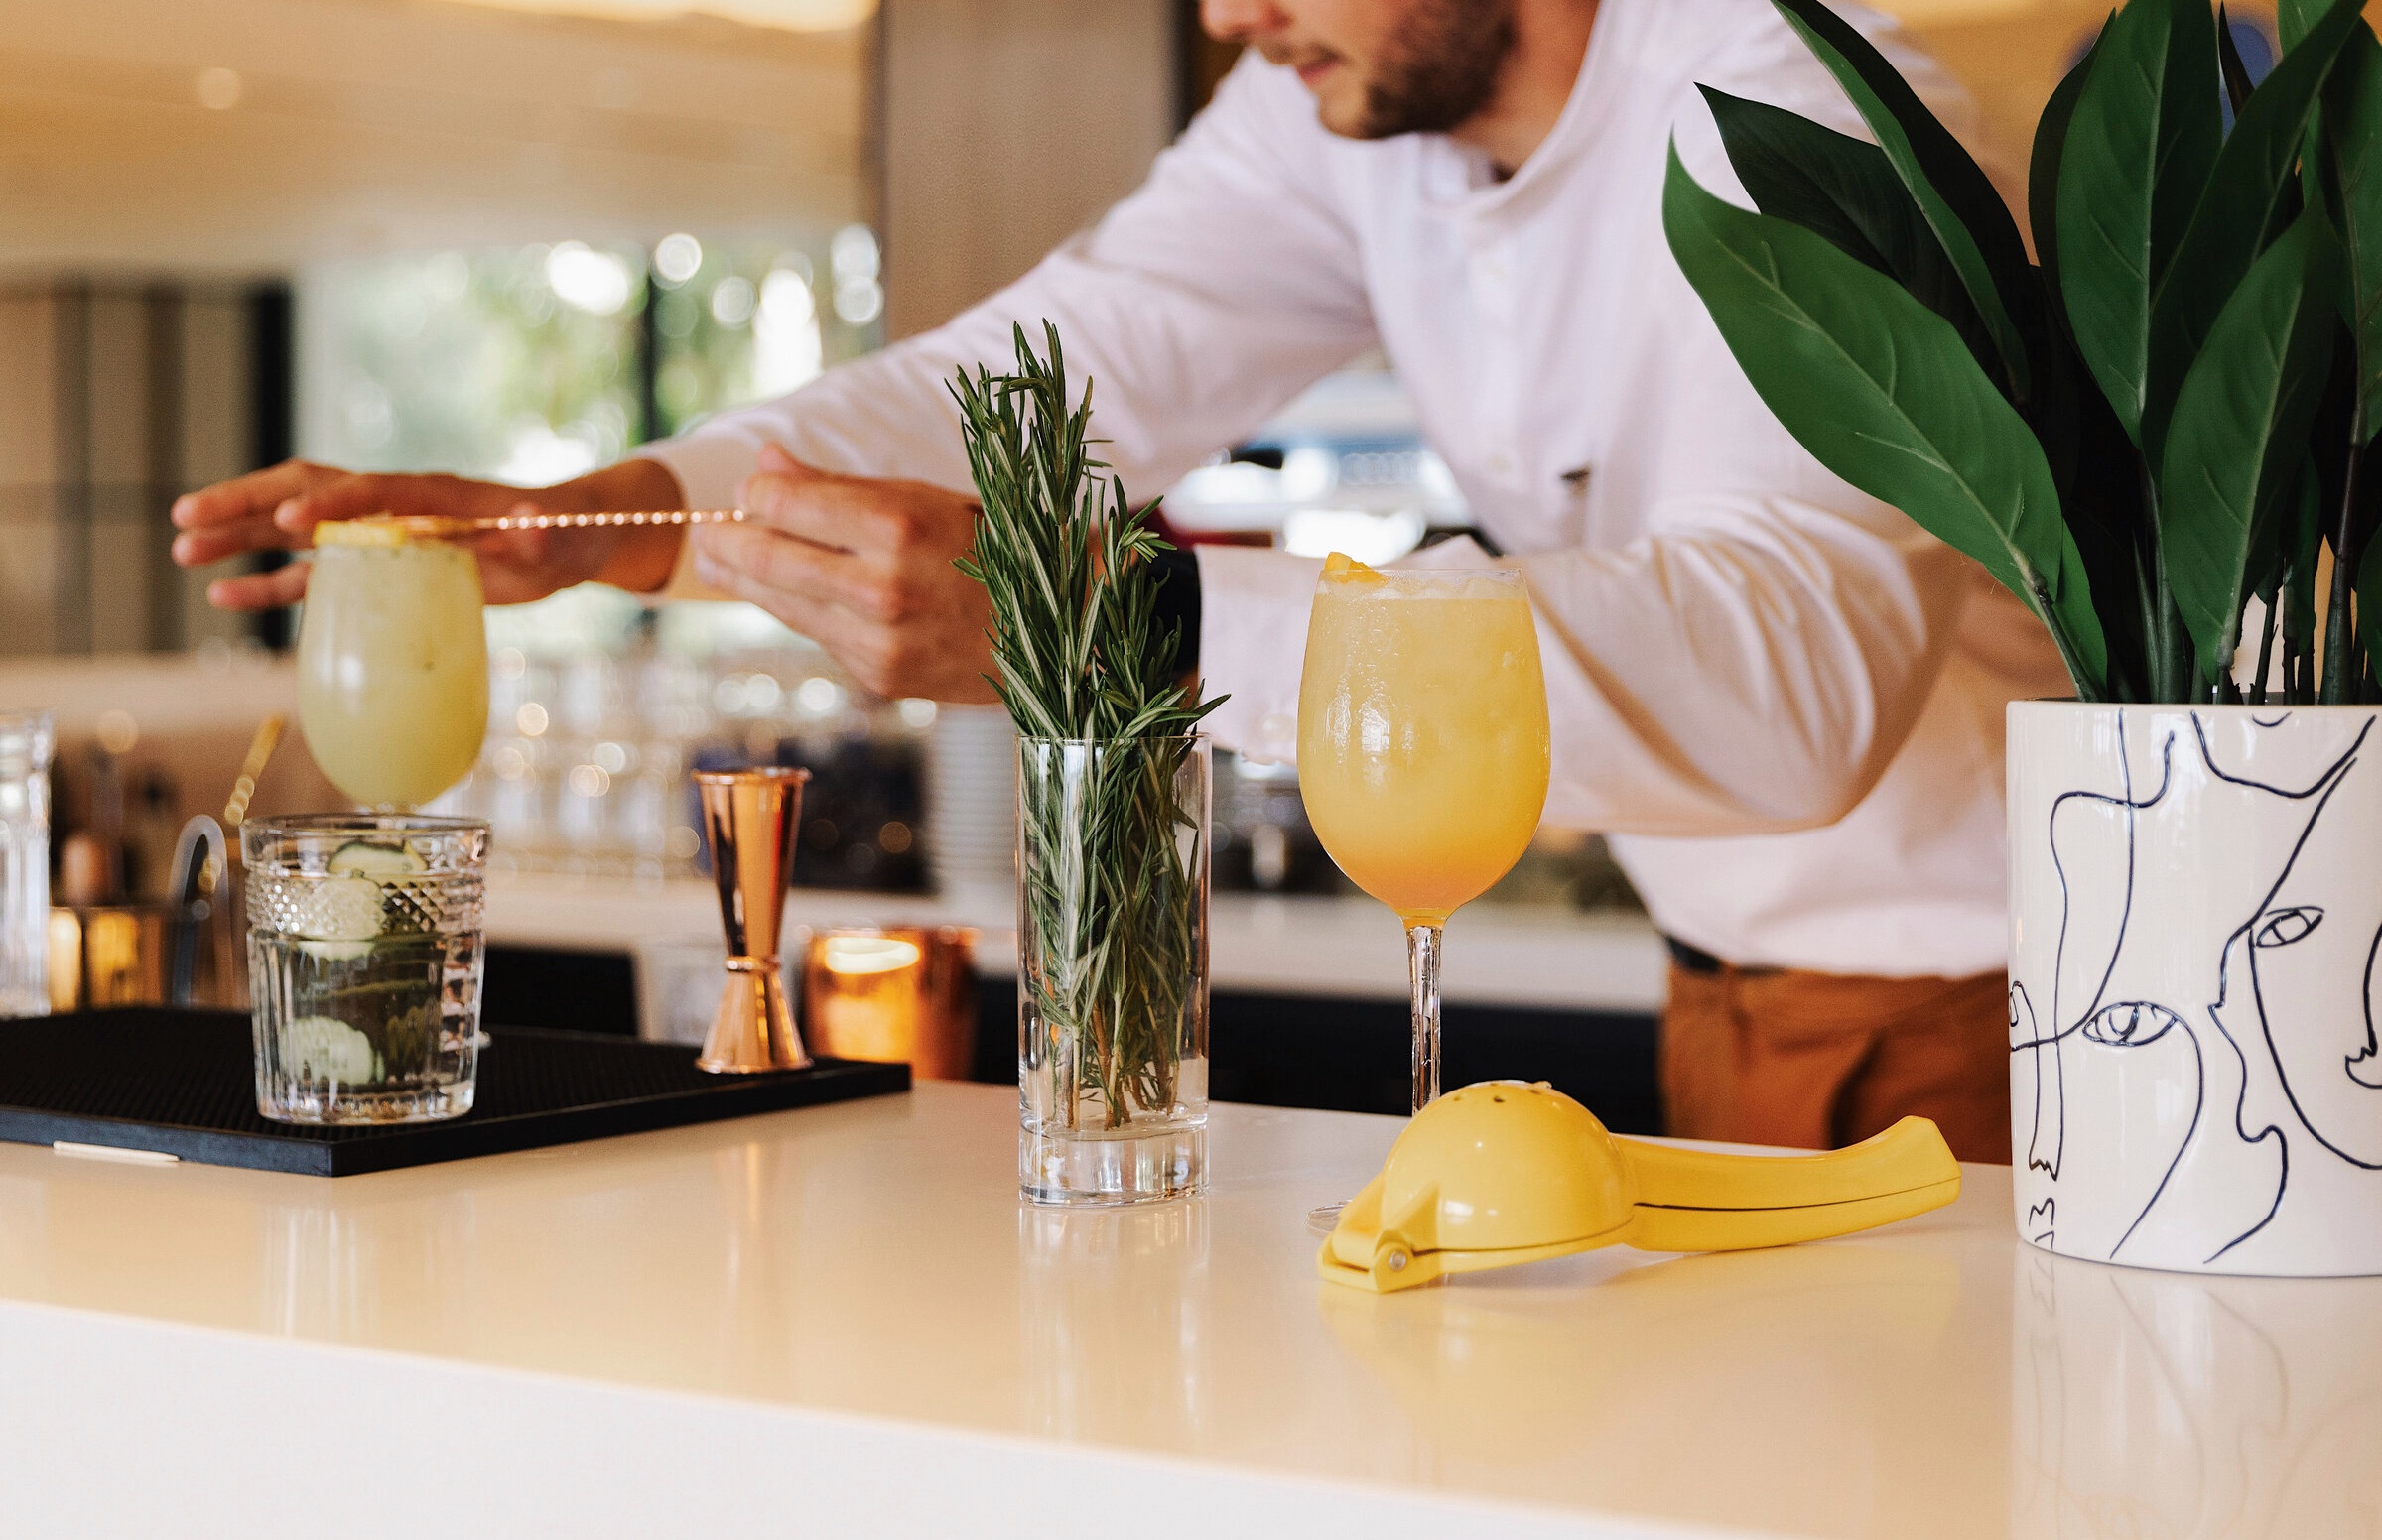 A bartender serving a signature cocktail